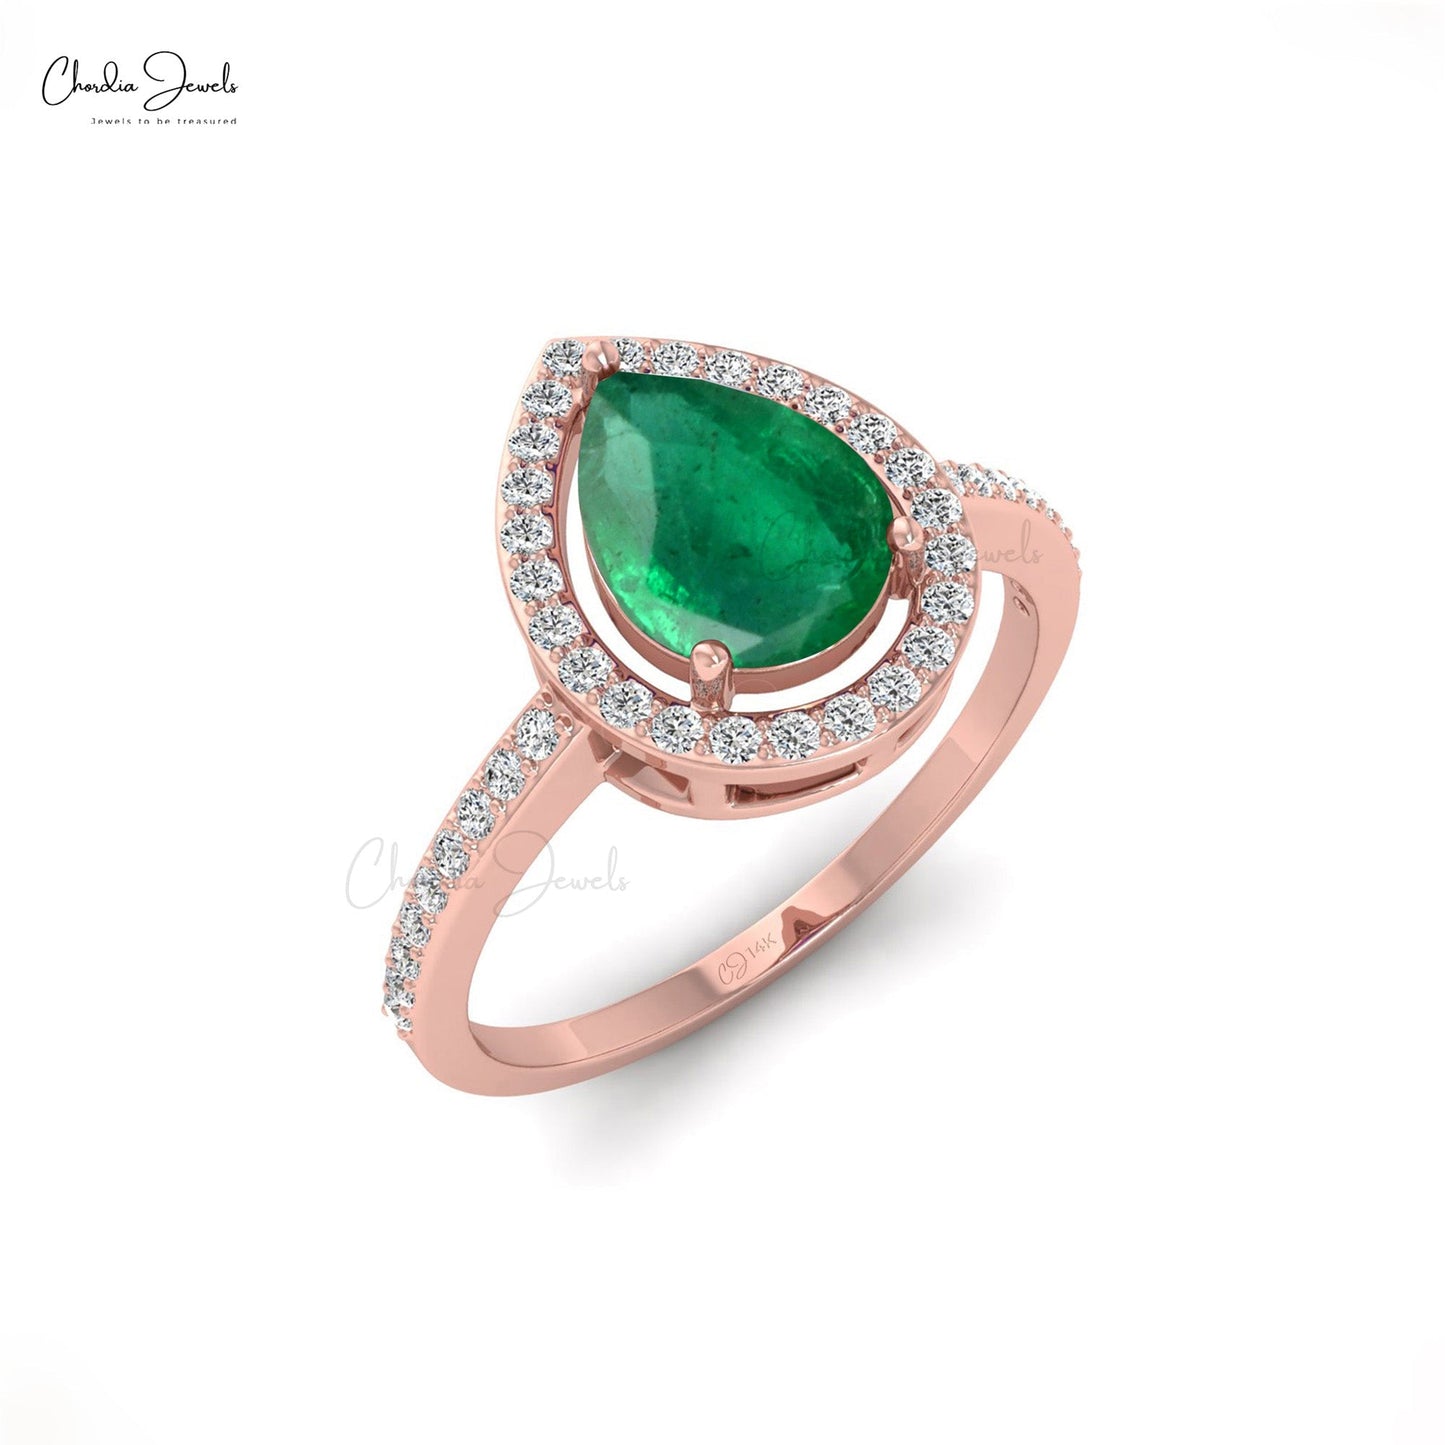 Natural Zambian Emerald 8X6MM Elegant Pear Cut Emerald Halo Ring